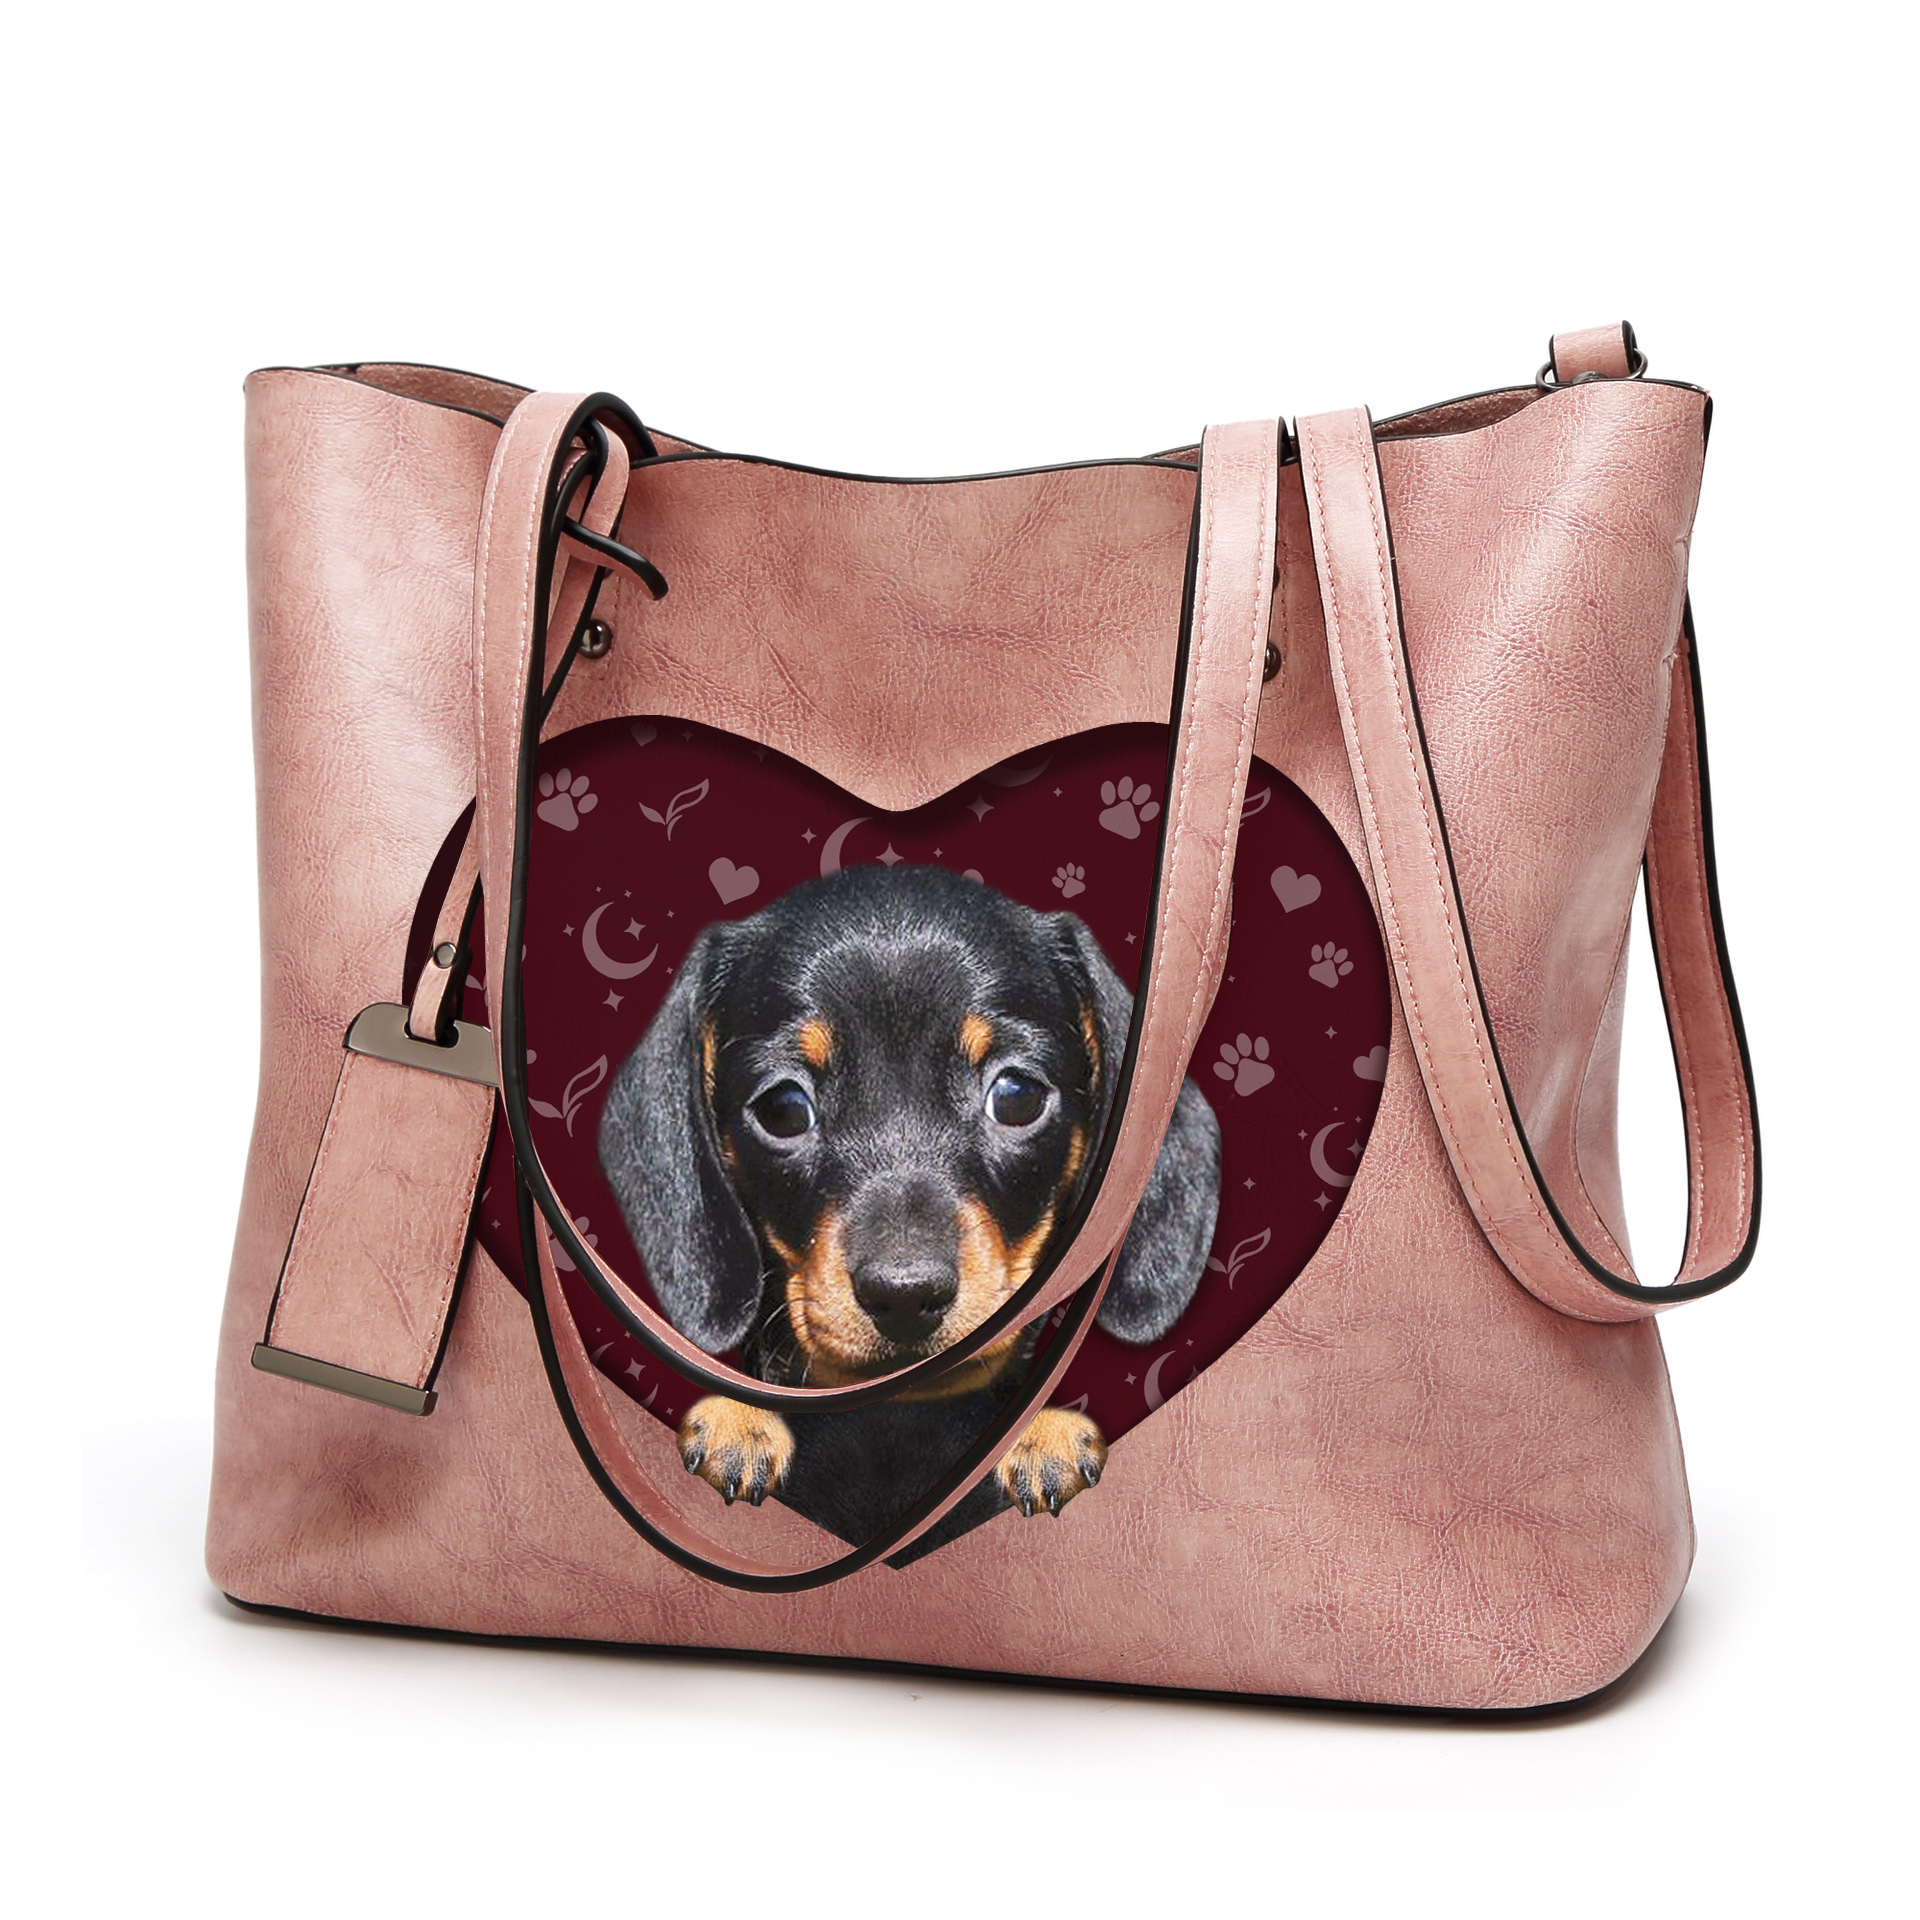 I Know I'm Cute - Dachshund Glamour Handbag V1 - 8